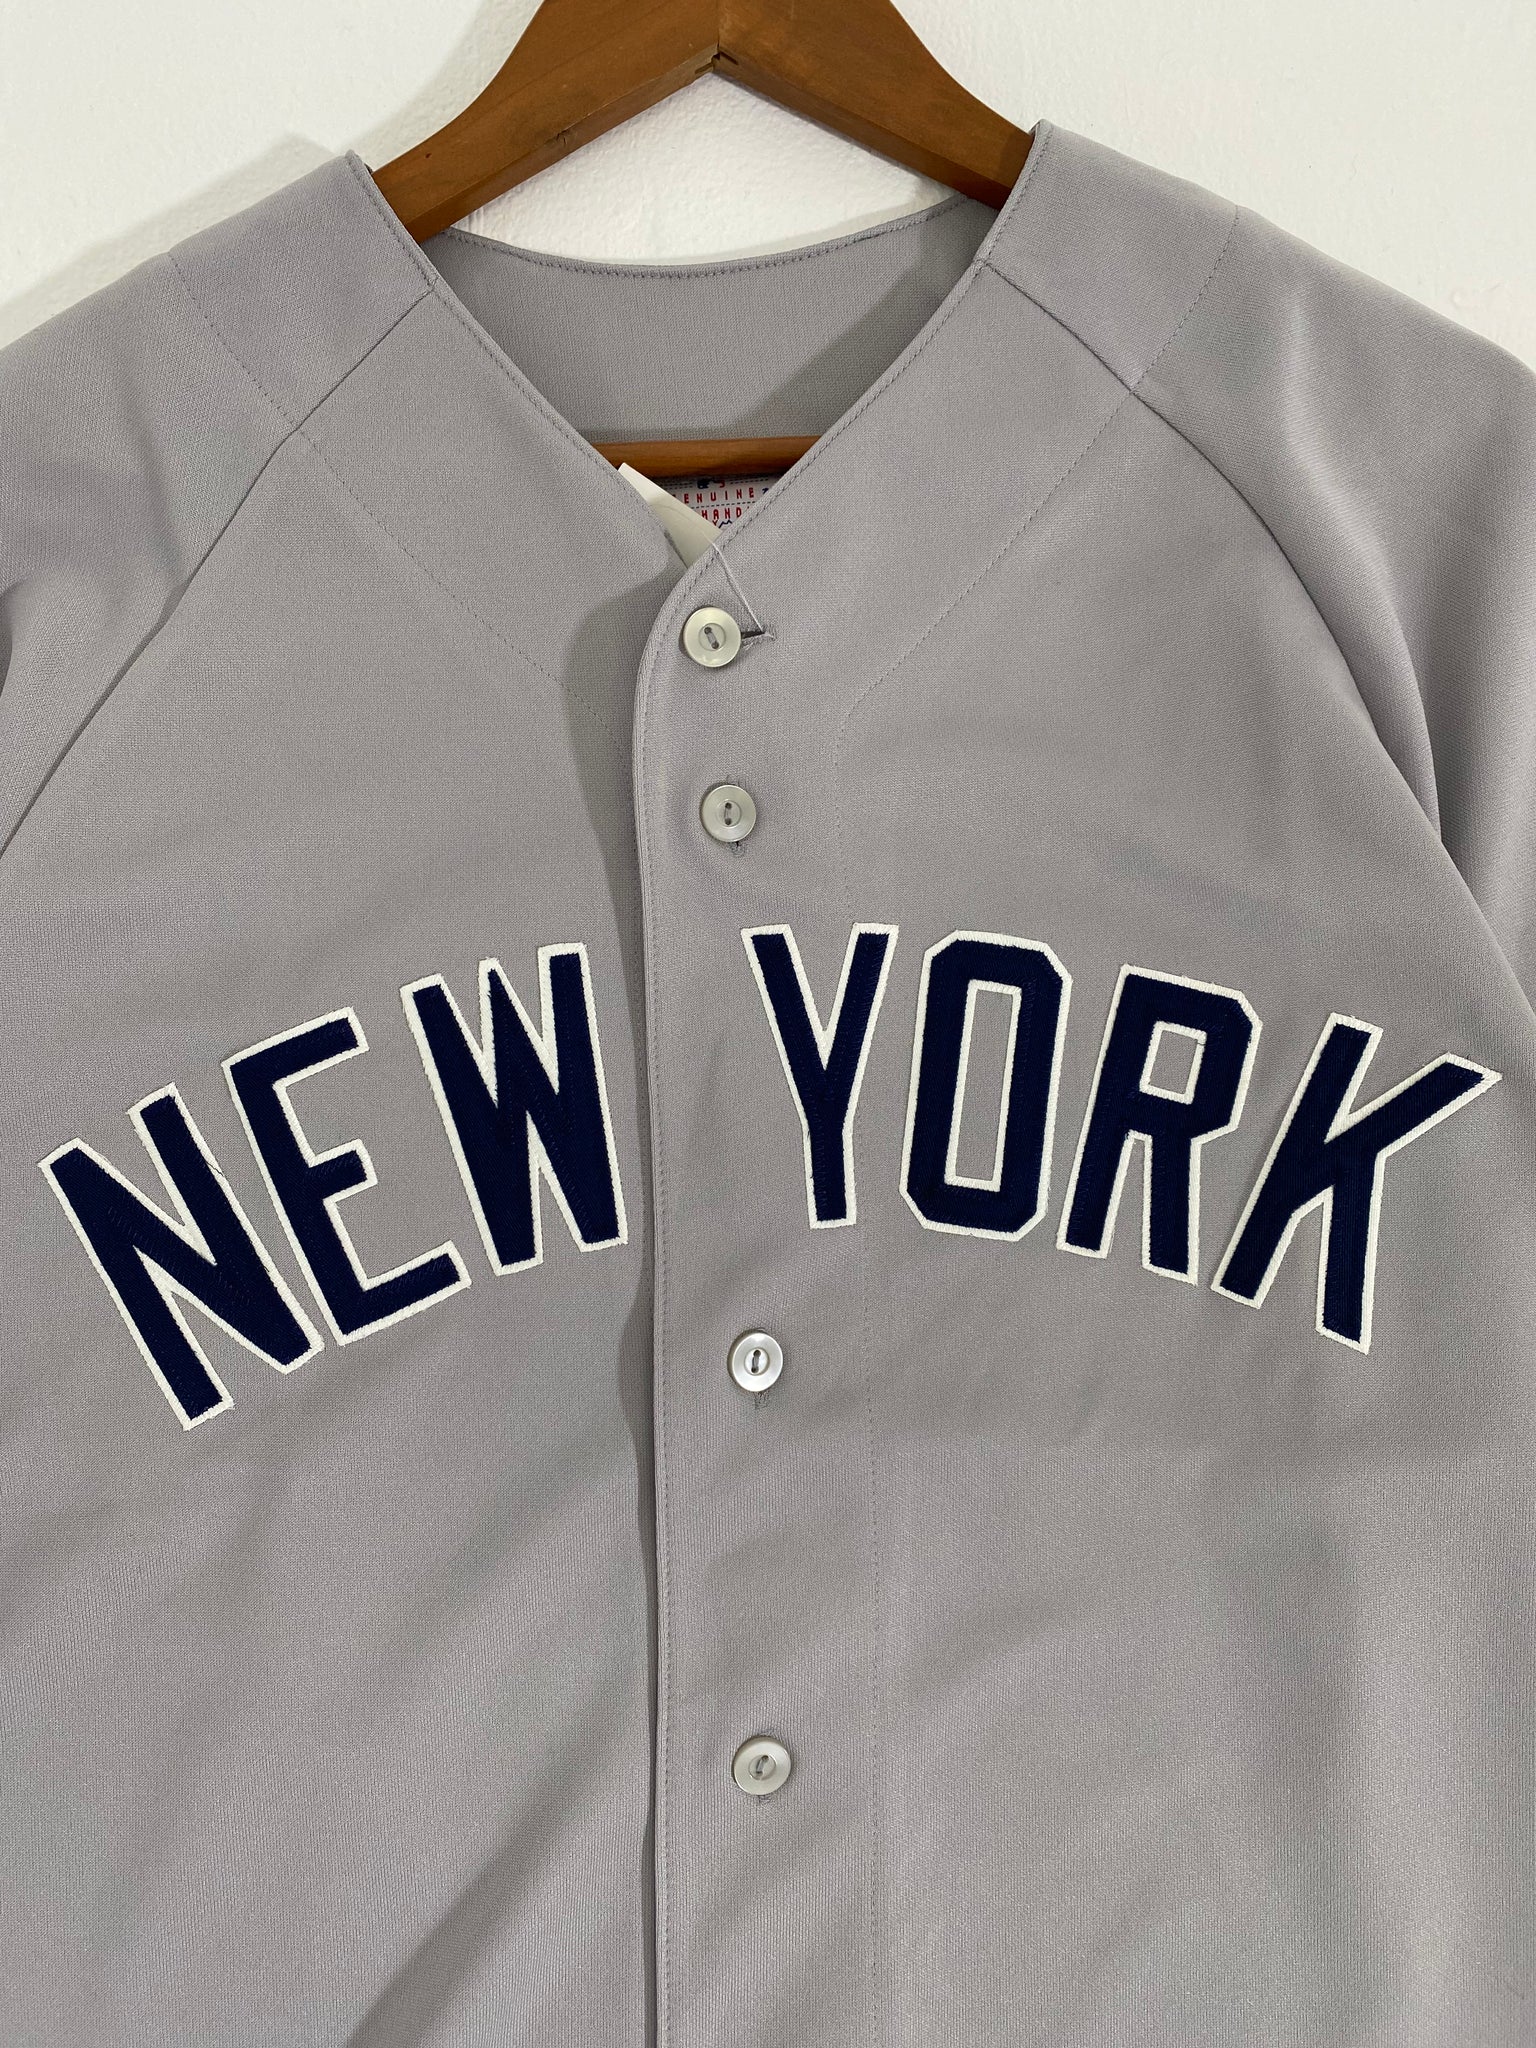 Vintage MLB New York Yankees Baseball Jersey